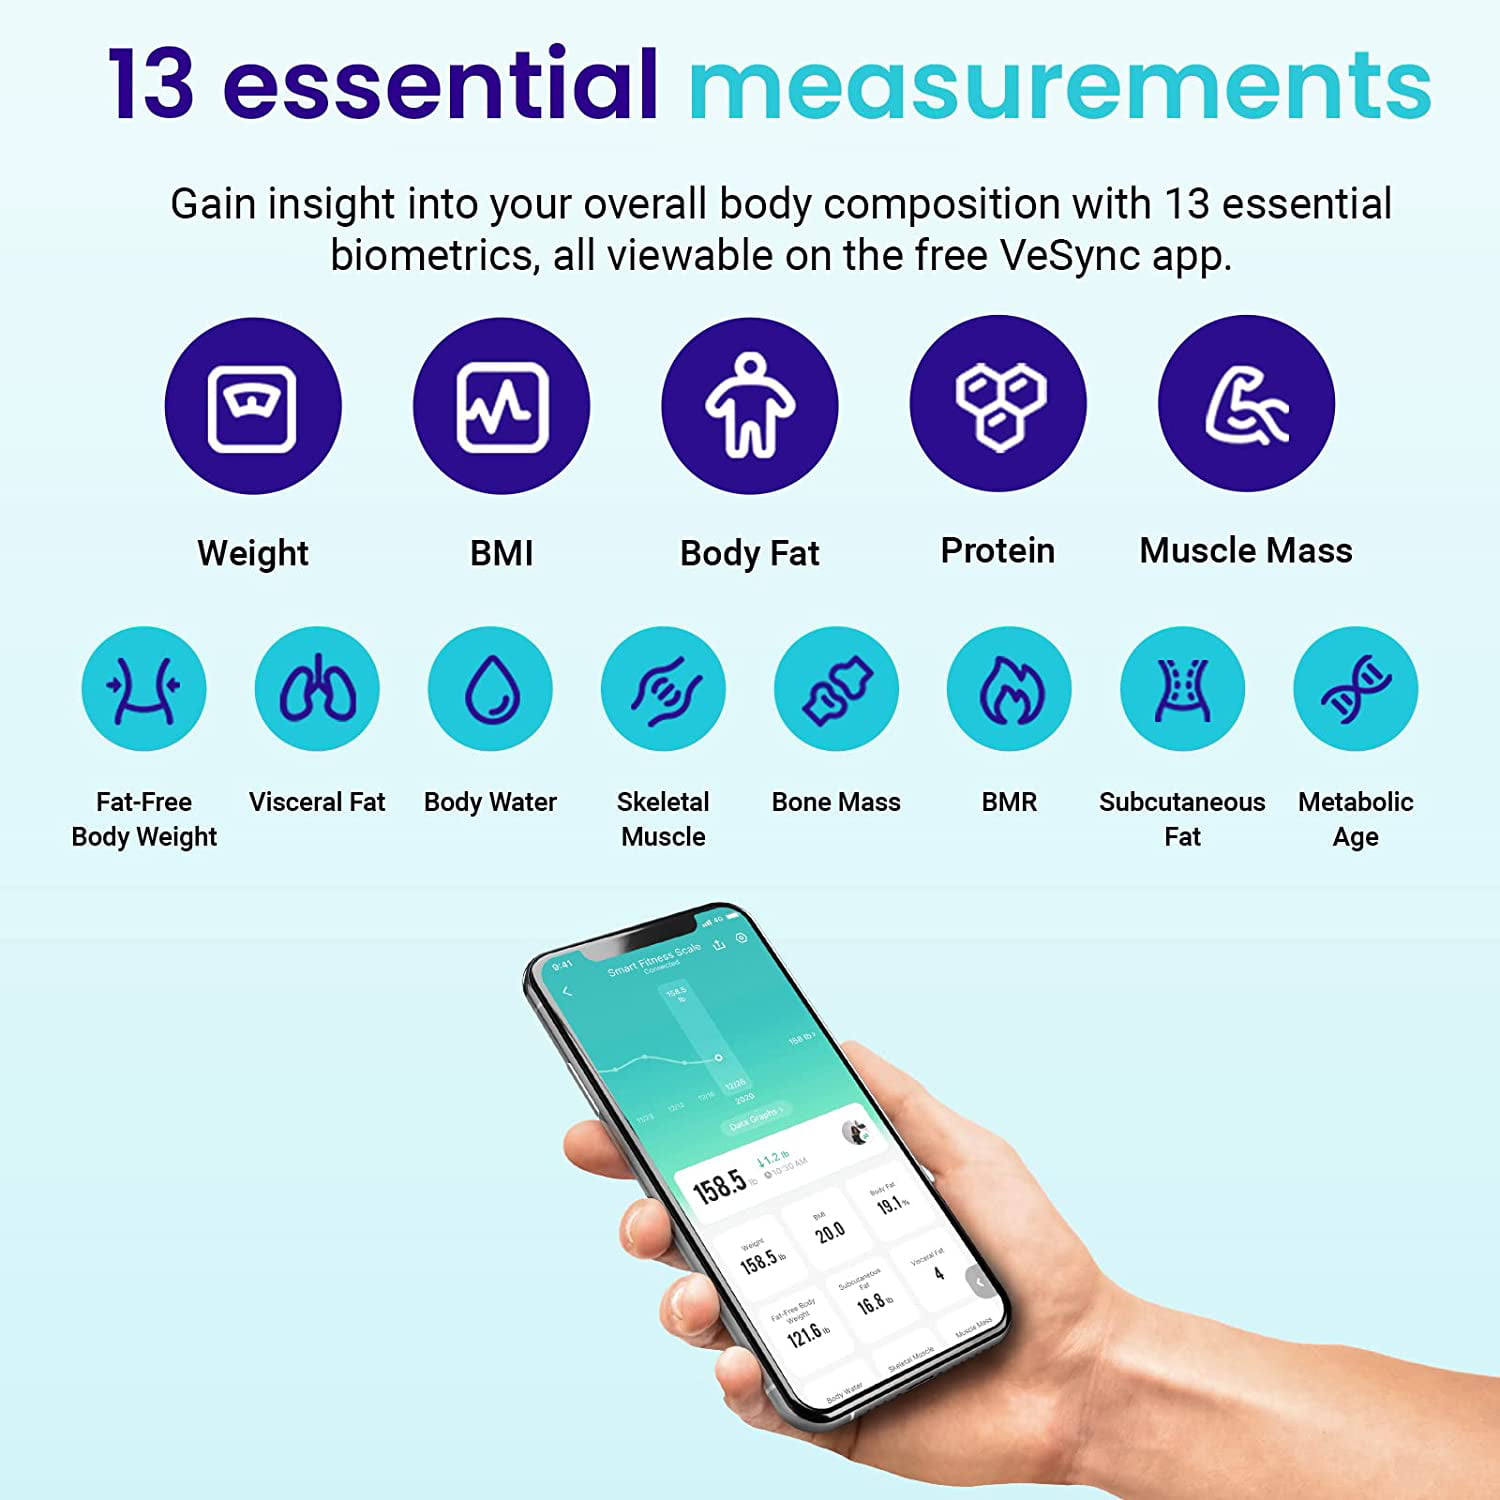 Etekcity's Smart Digital Bathroom Scale measures 13 health metrics